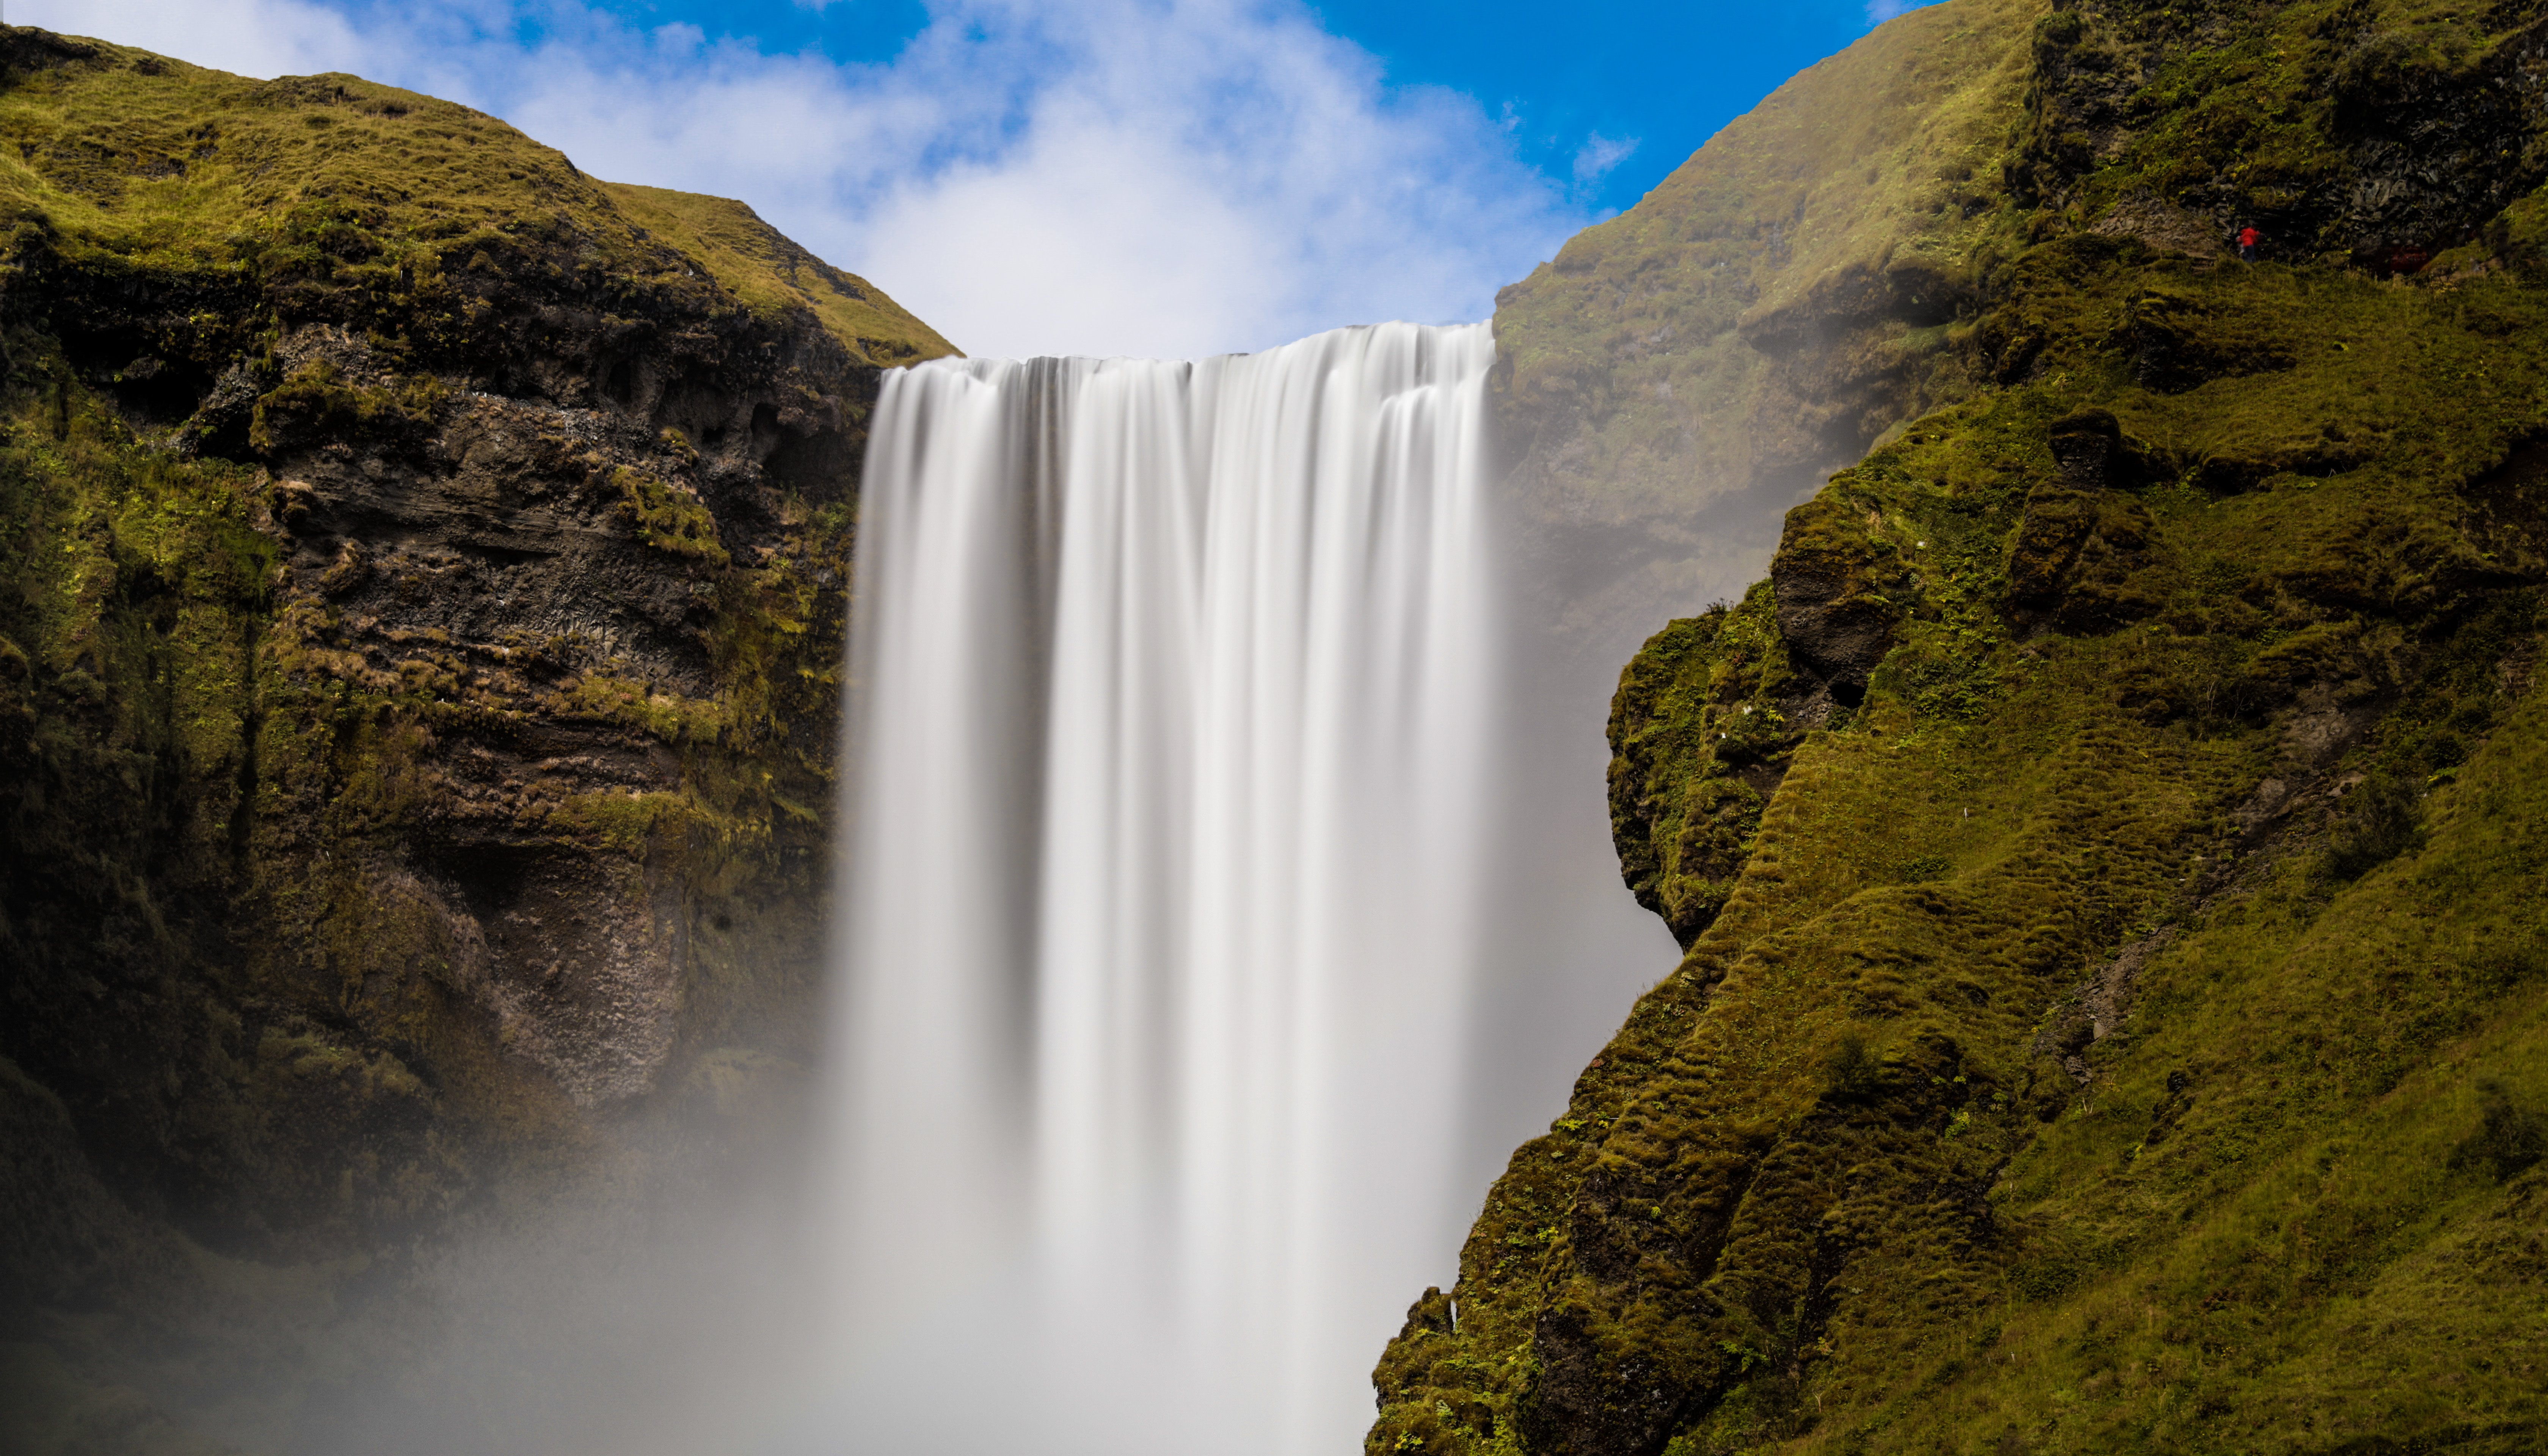 Read Three Days in Iceland by Scott Kelby